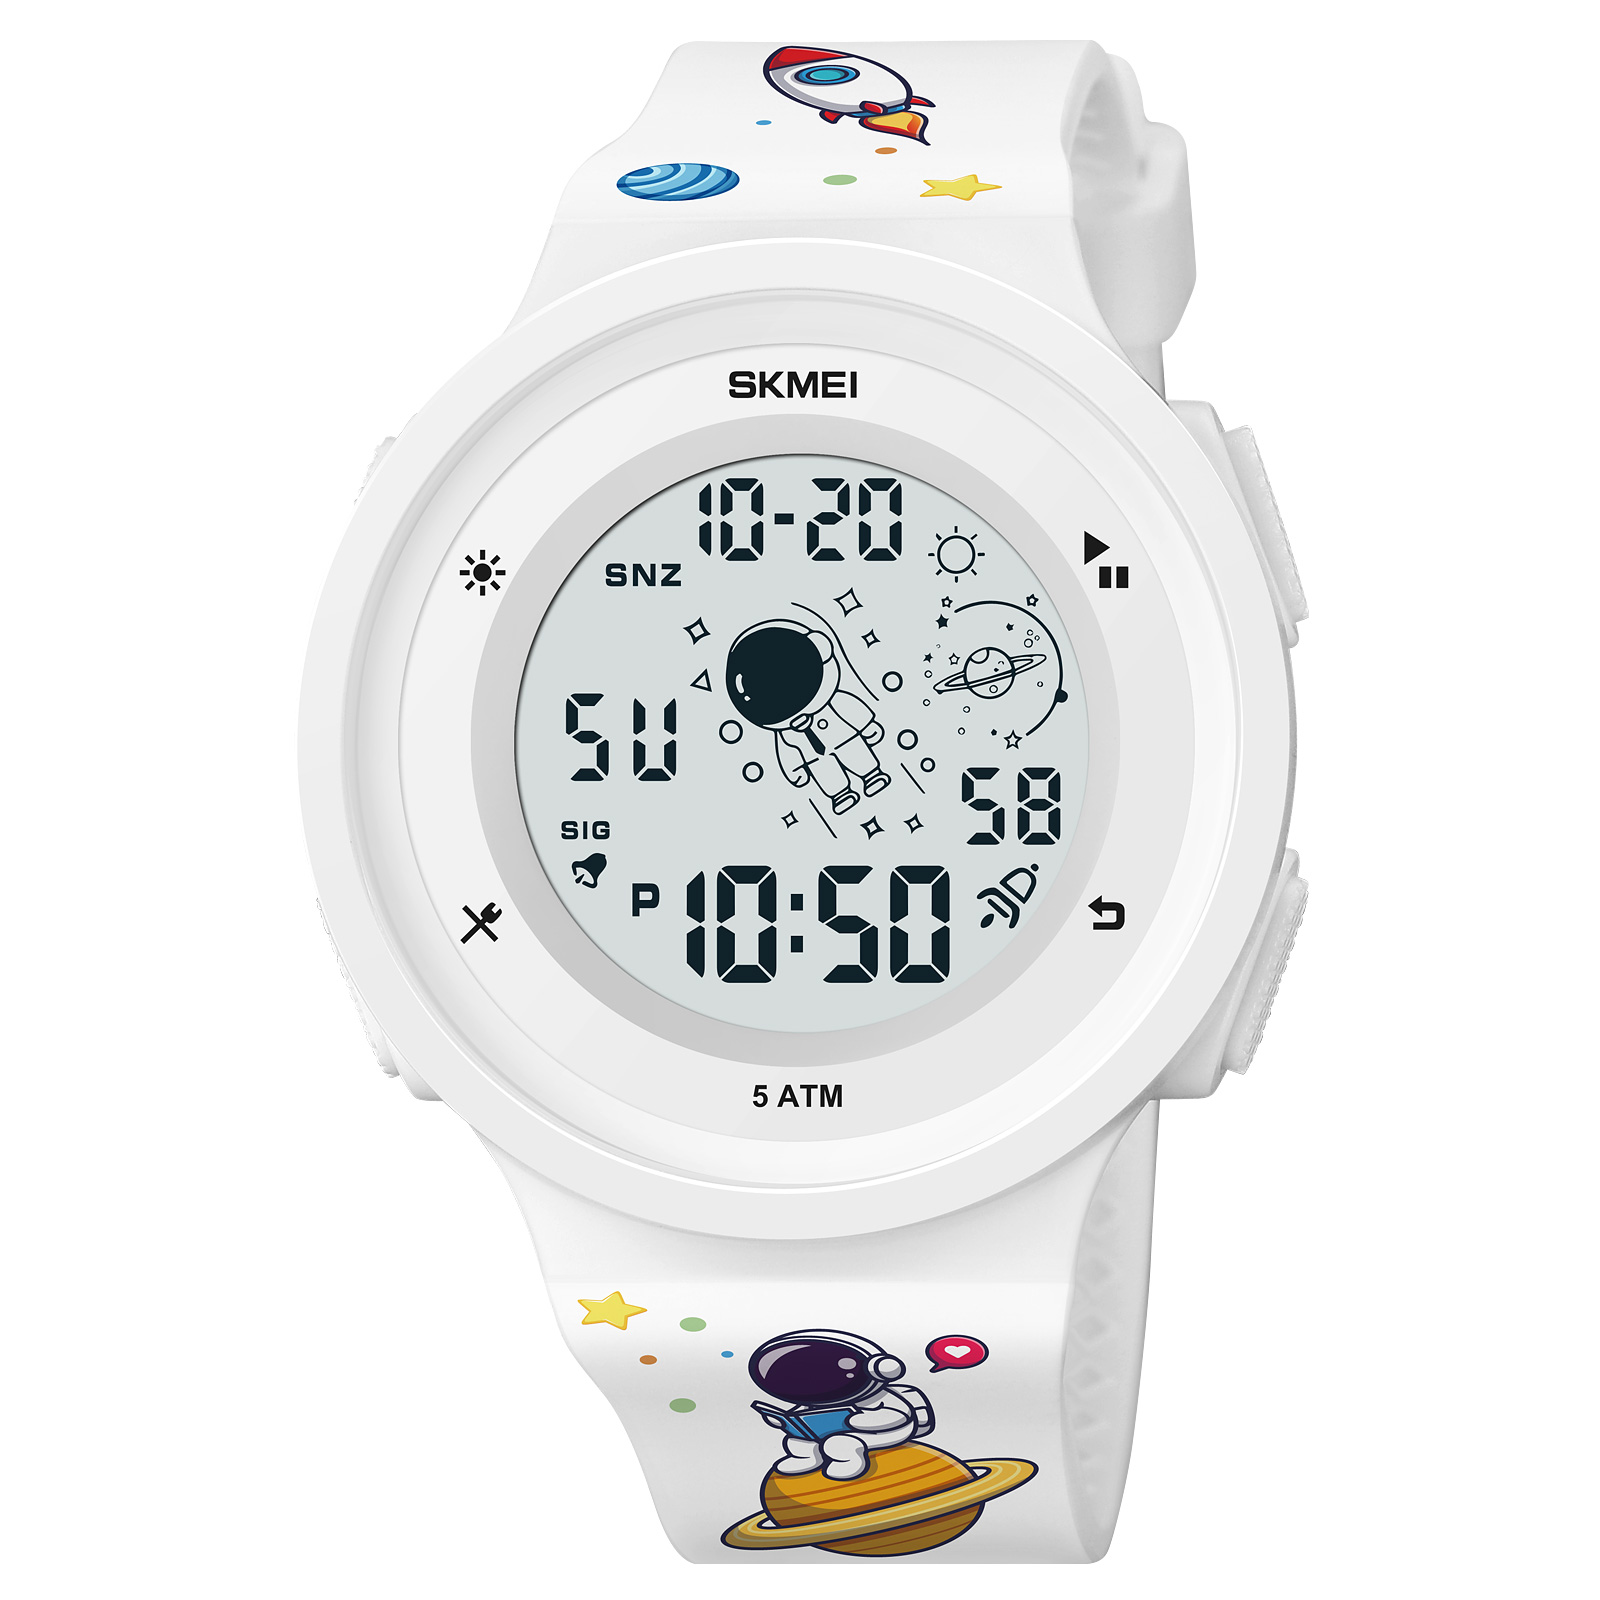 SKMEI Digital Watch Wholesaler -Skmei Watch Manufacture Co.,Ltd